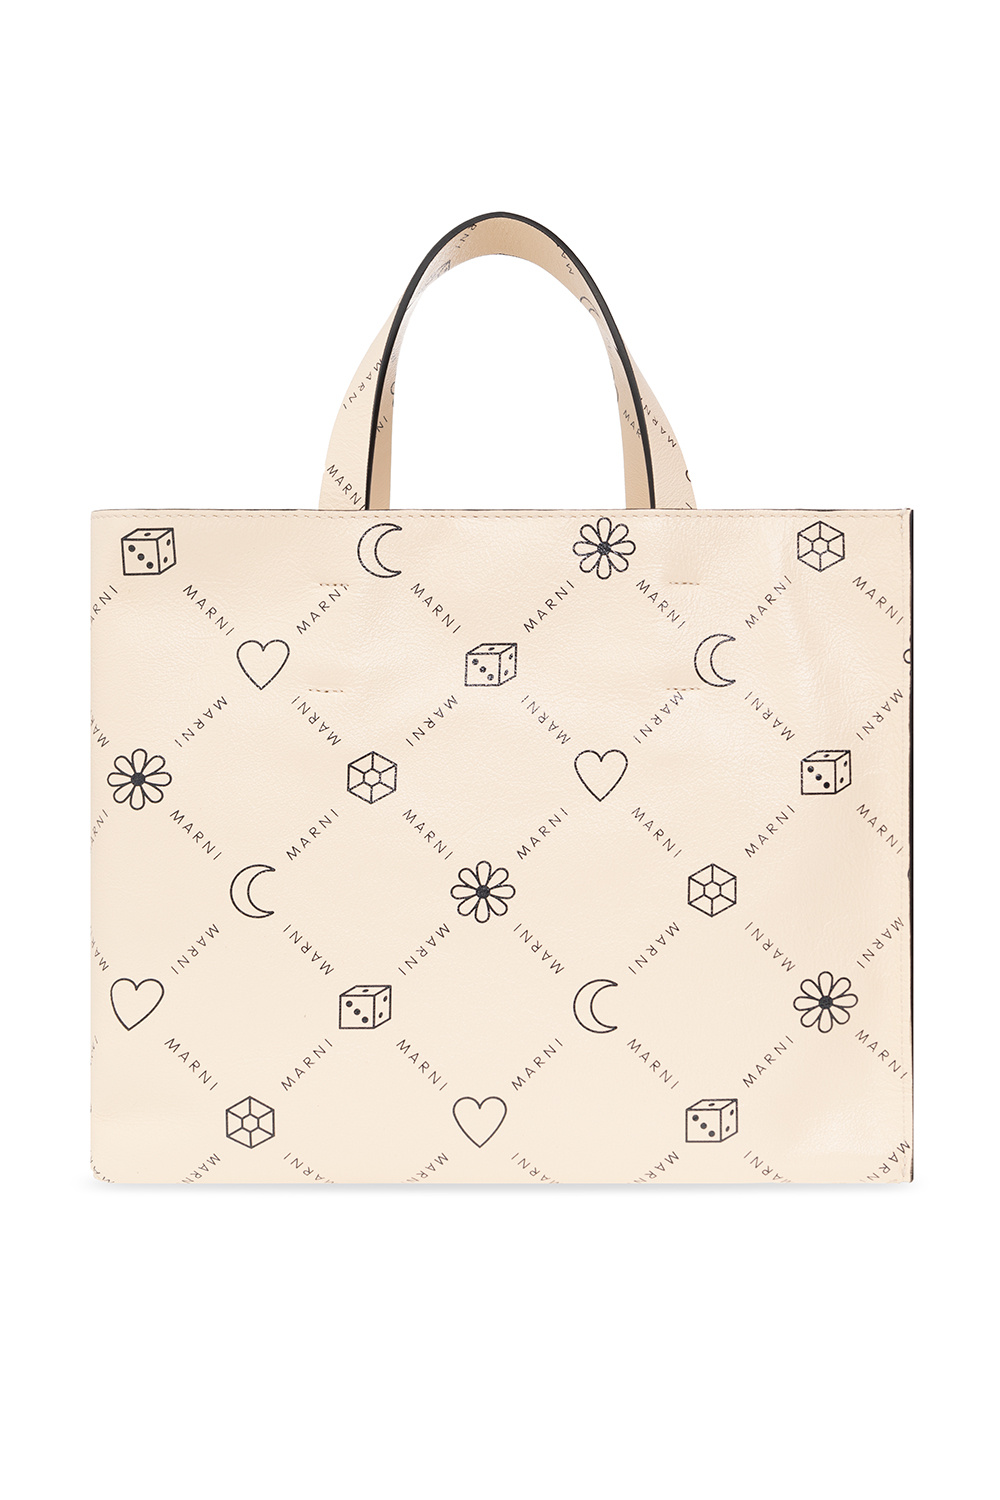 marni with Shopper bag